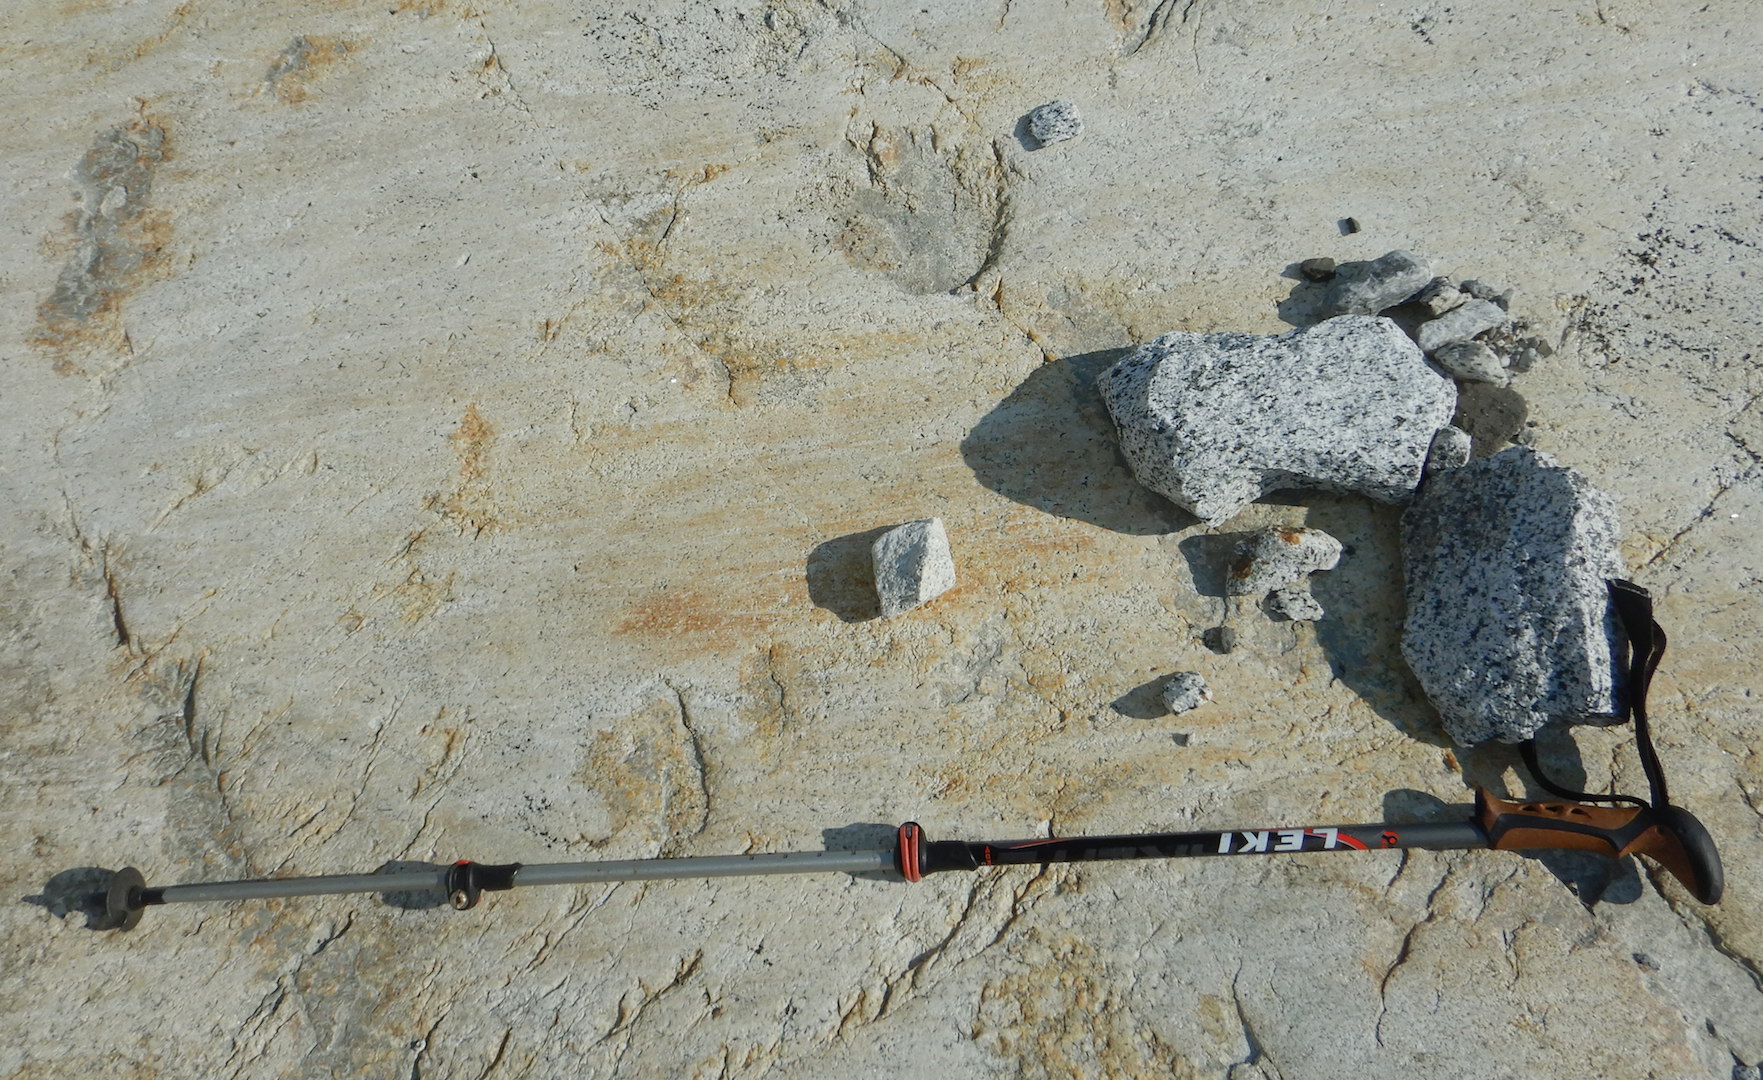 hiking pole lying on bare rock. Rock shows faint horizontal striations.